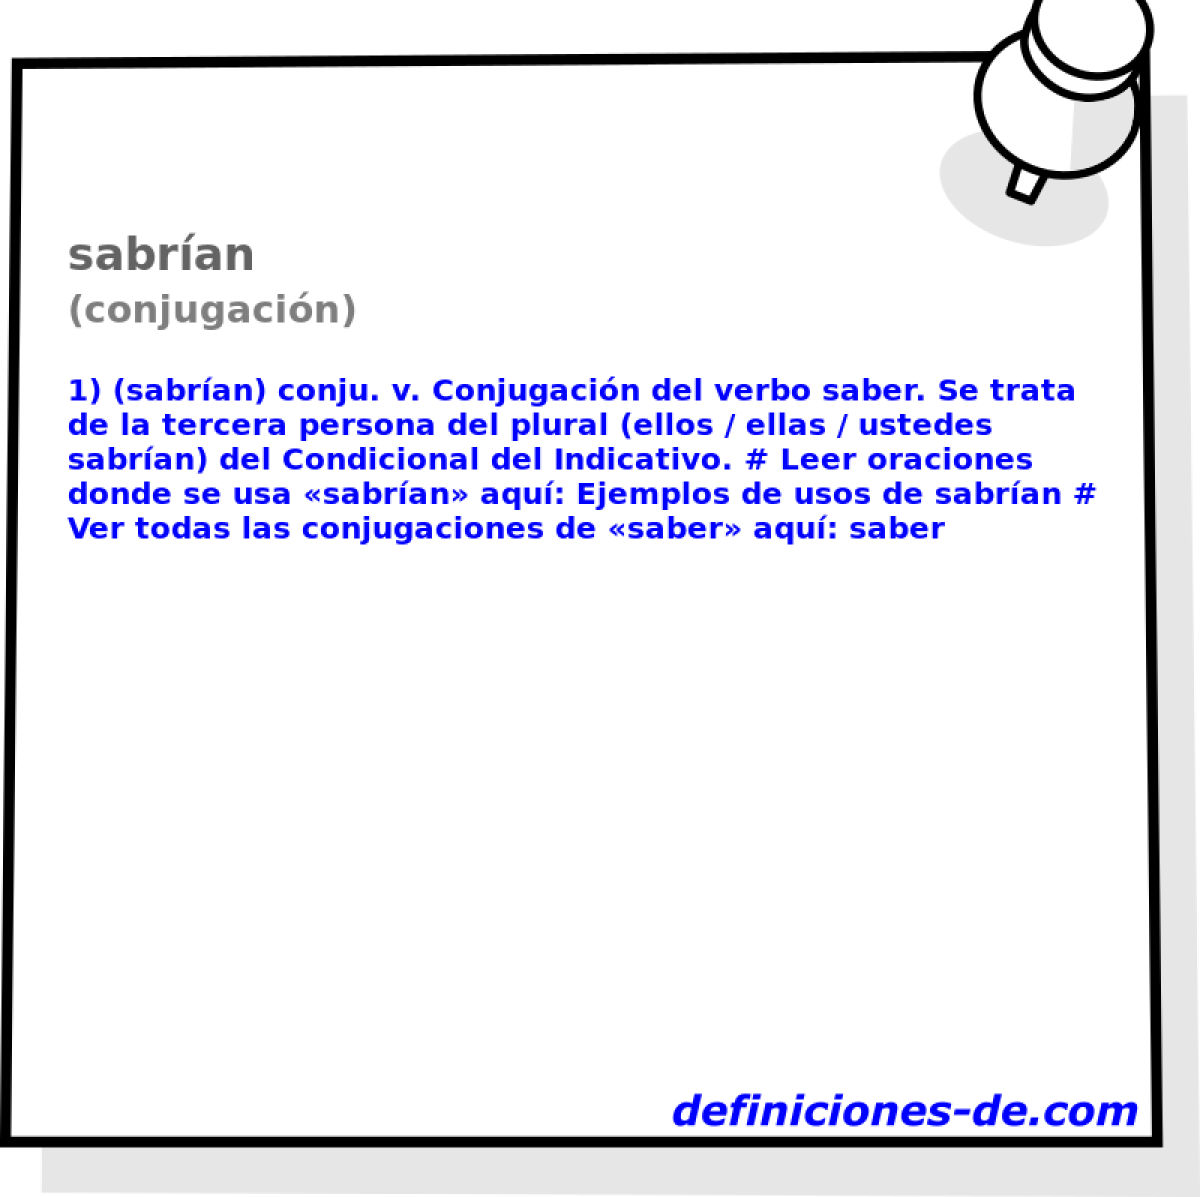 sabran (conjugacin)